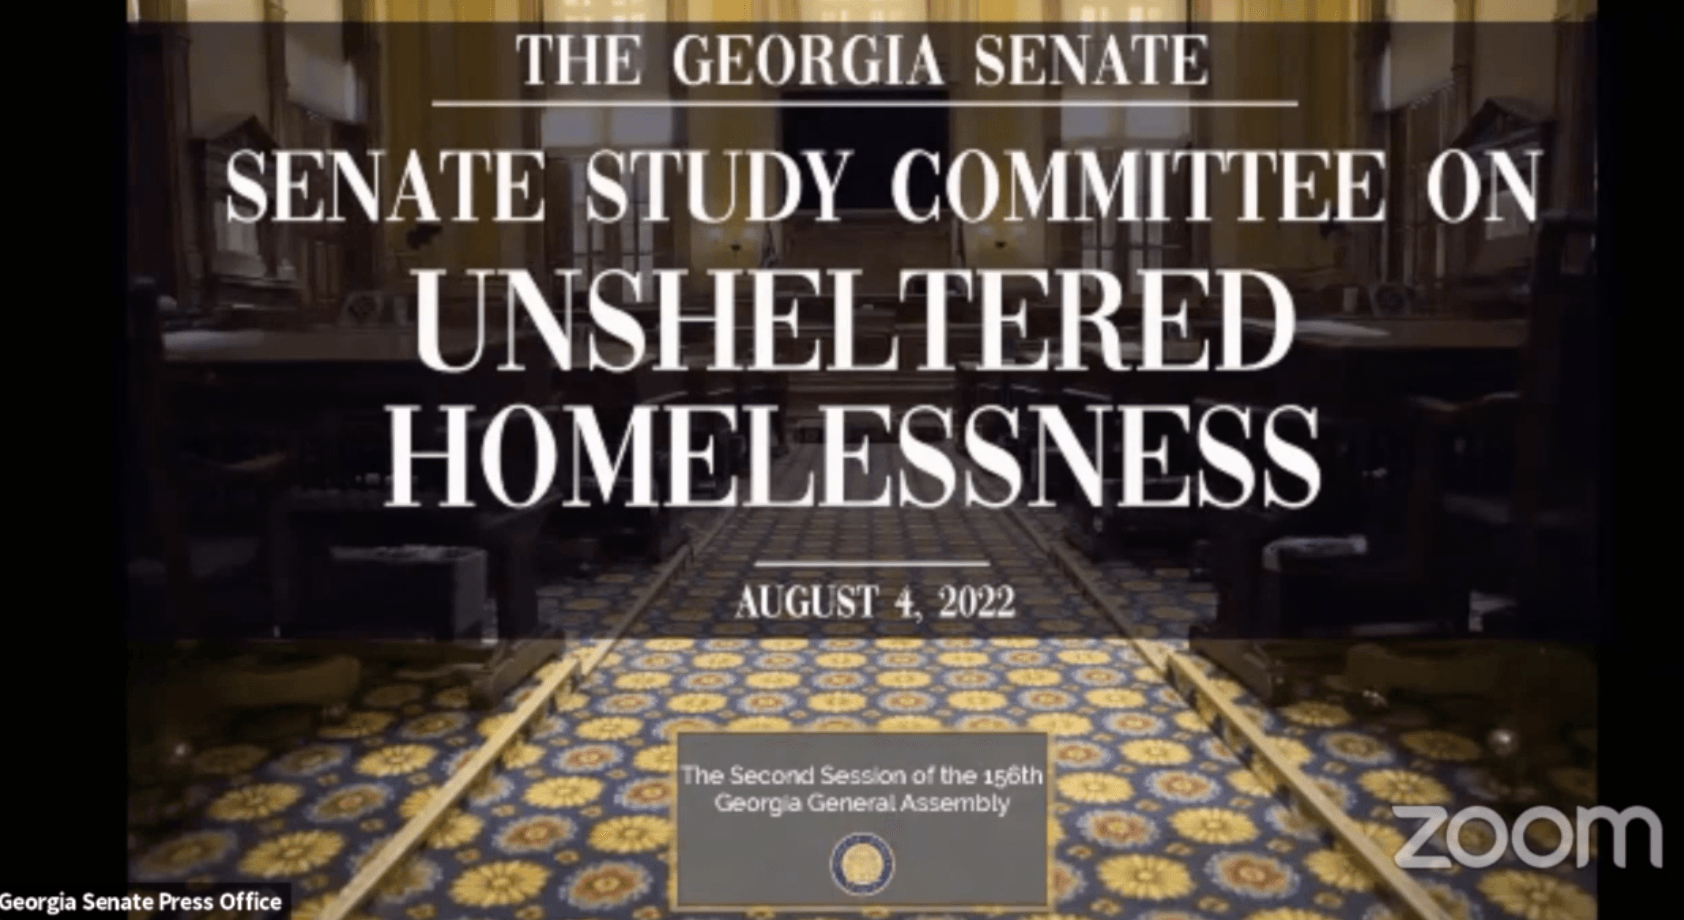 the Georgia senate study committee on unsheltered homelessness